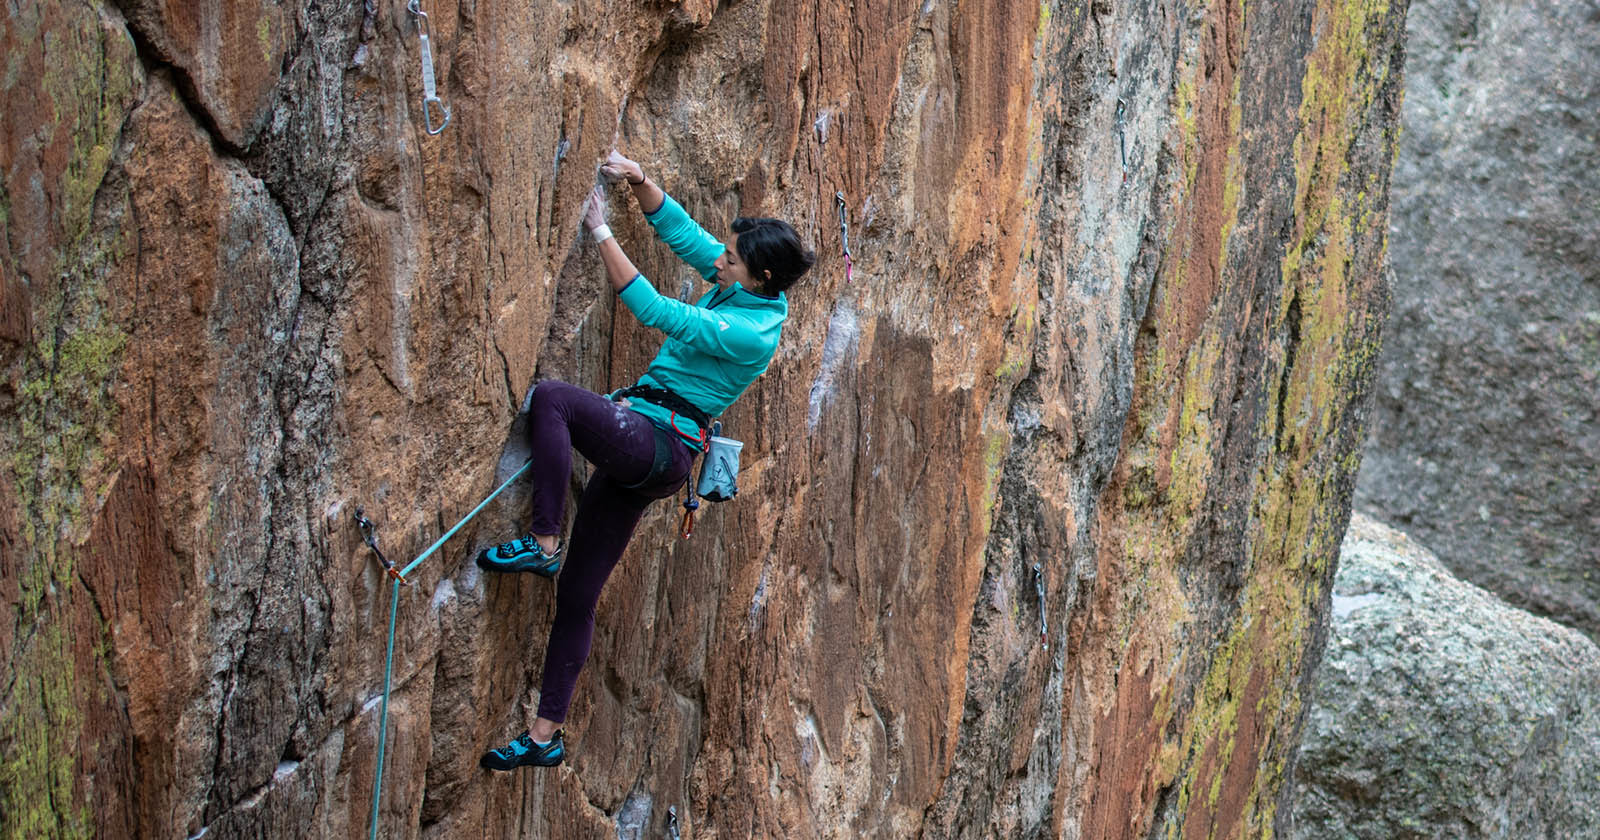  tara kerzhner unstoppable rock-climbing adventure photographer 